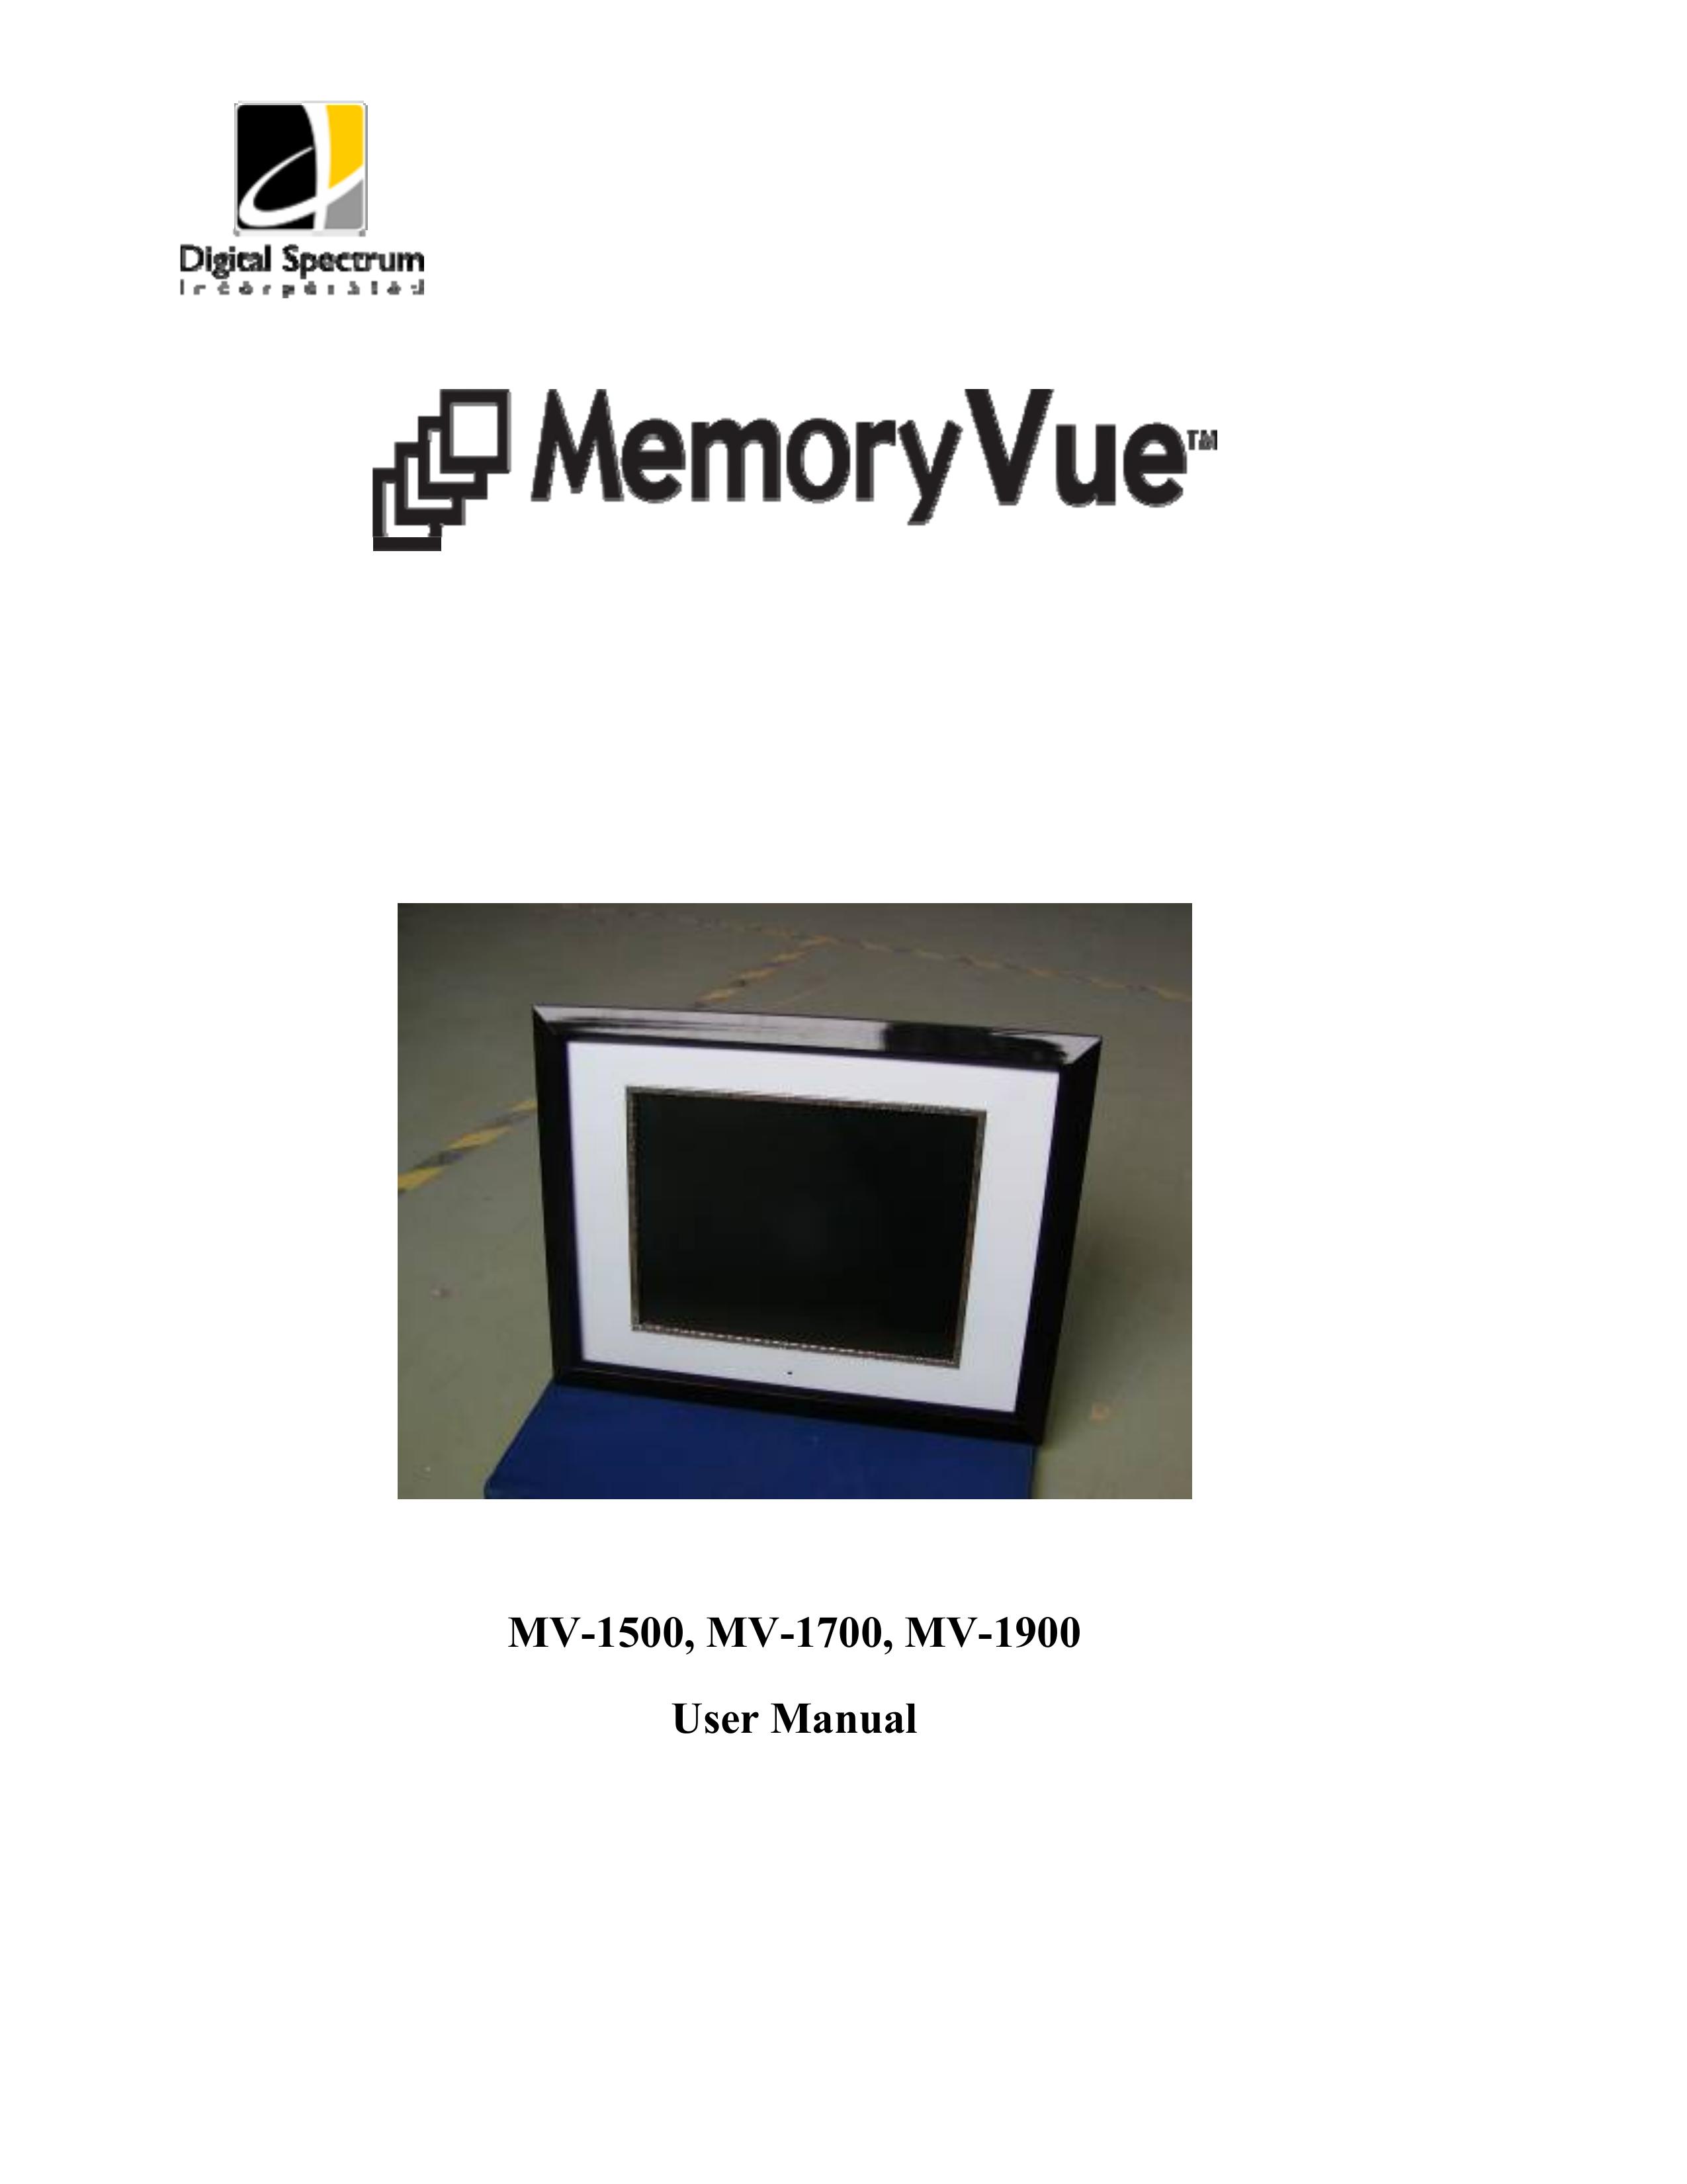 Digital Spectrum MV-1700 Digital Photo Frame User Manual